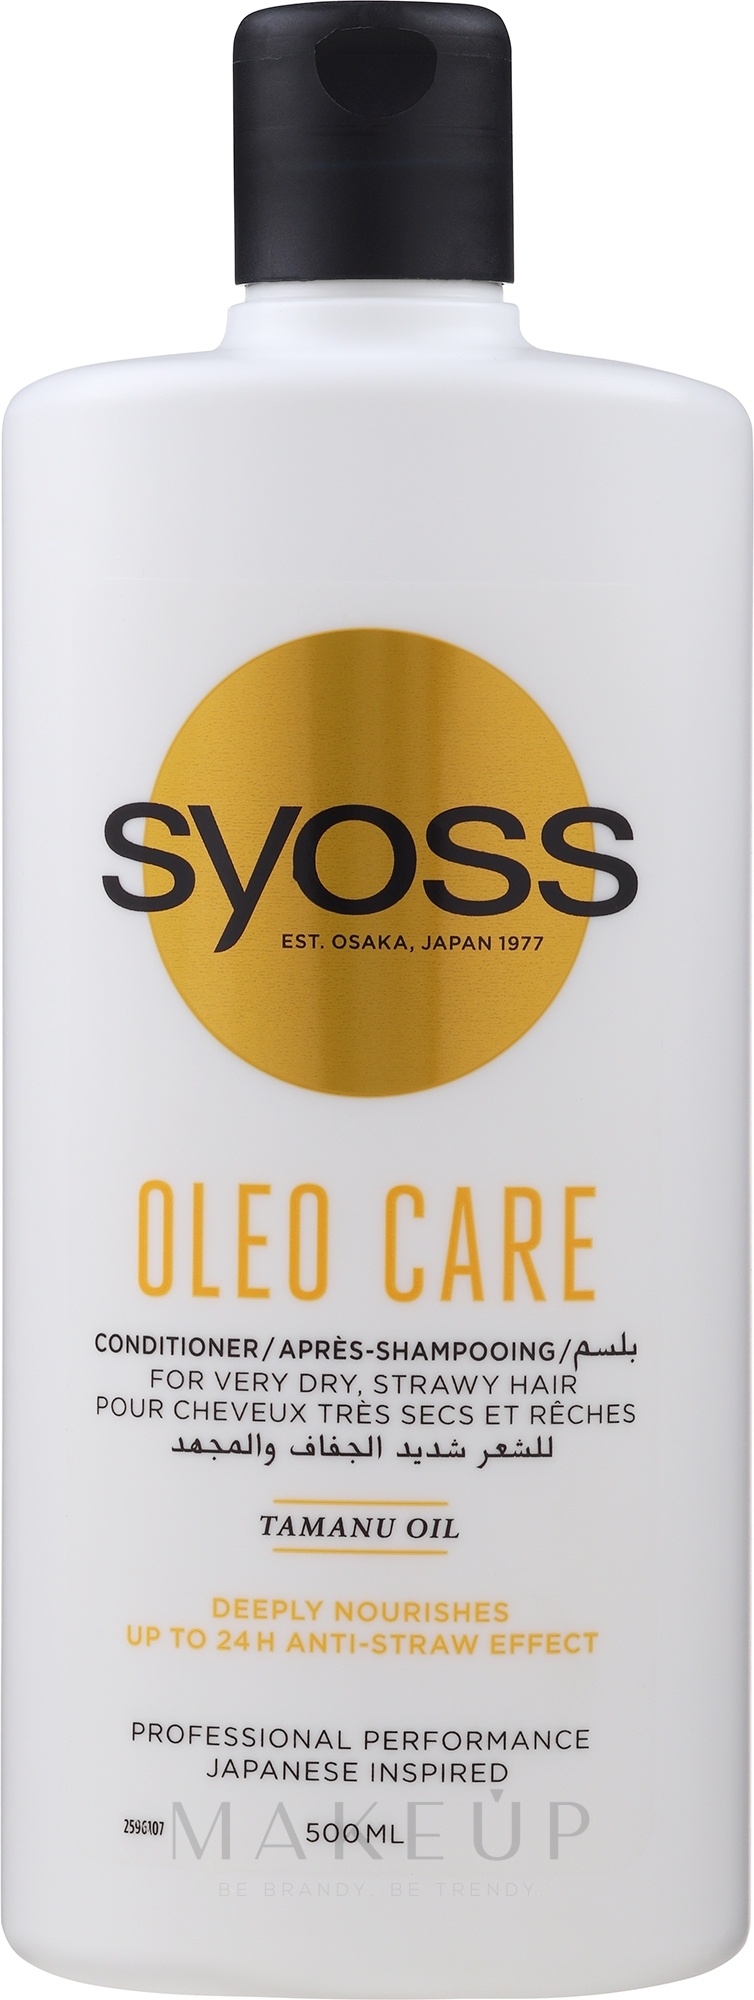 Syoss Oleo Care Conditioner